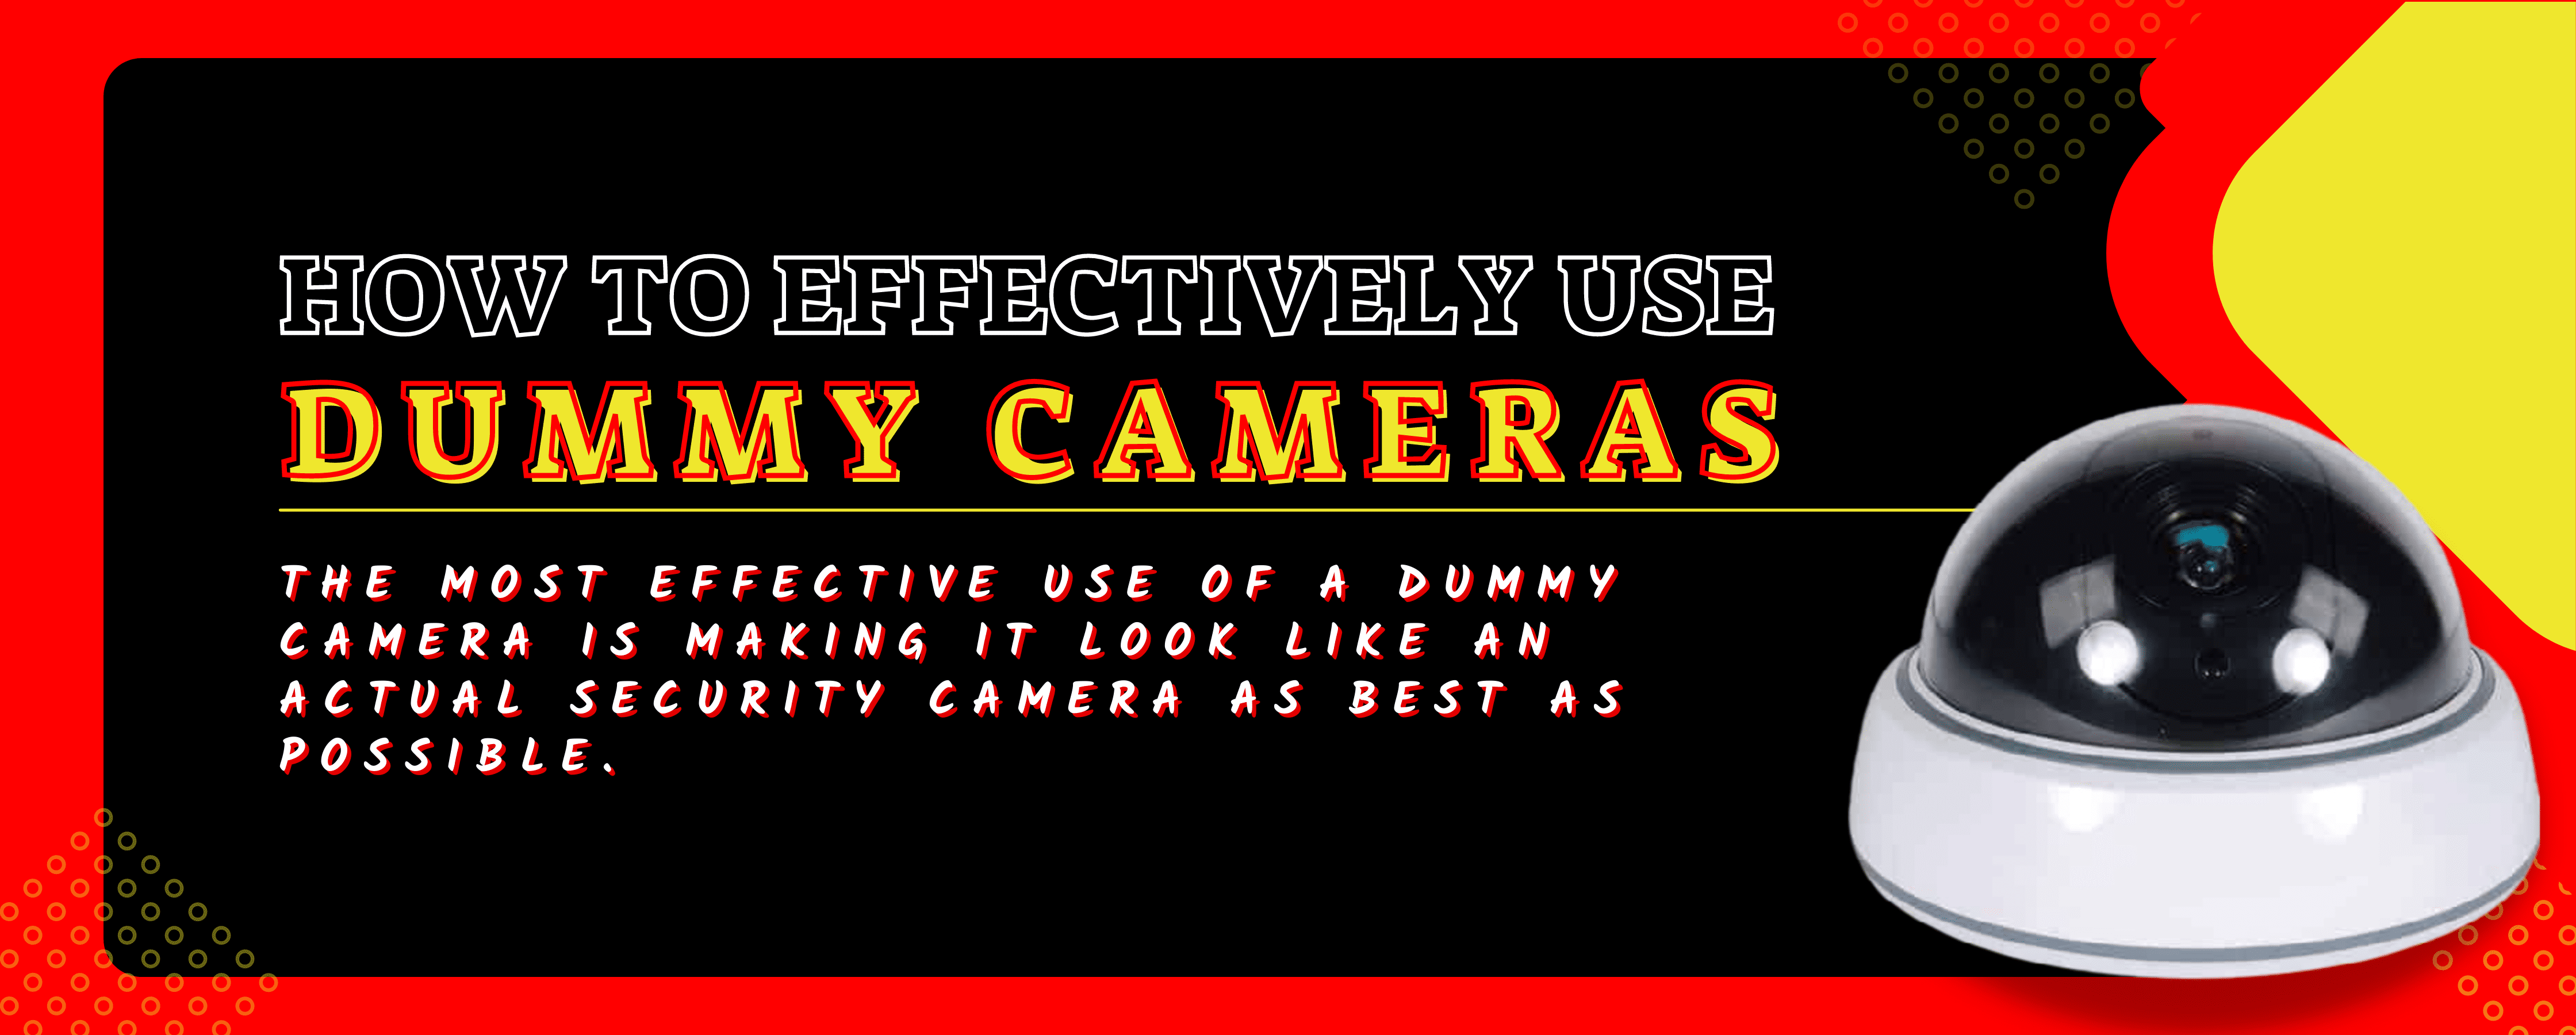 Dummy Cameras Security Defense Weapon